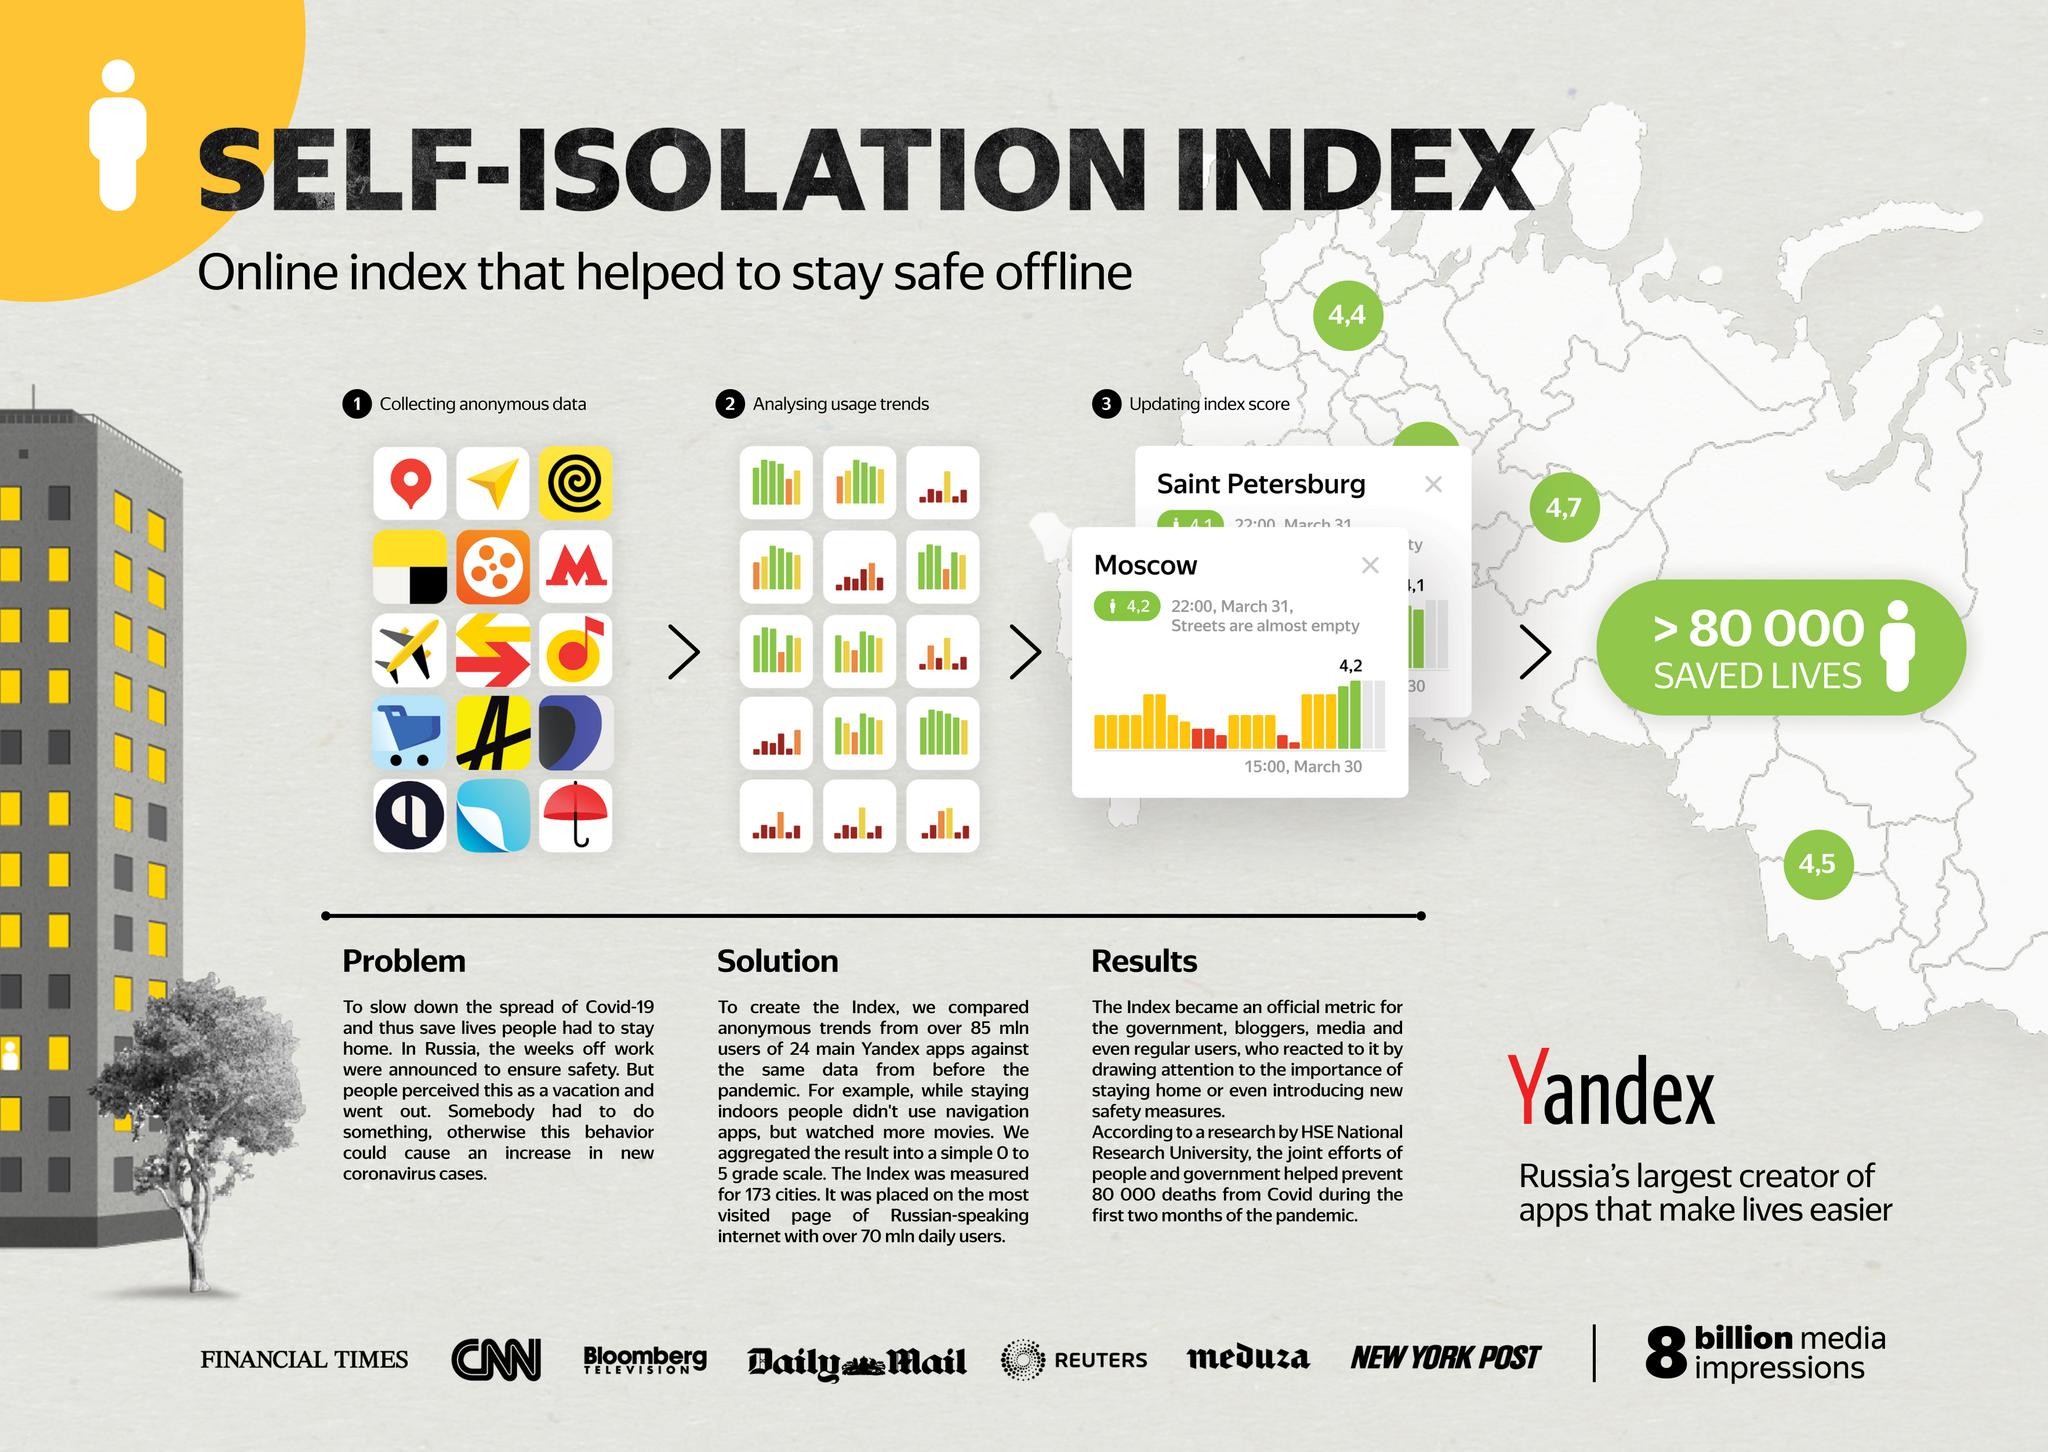 SELF-ISOLATION INDEX